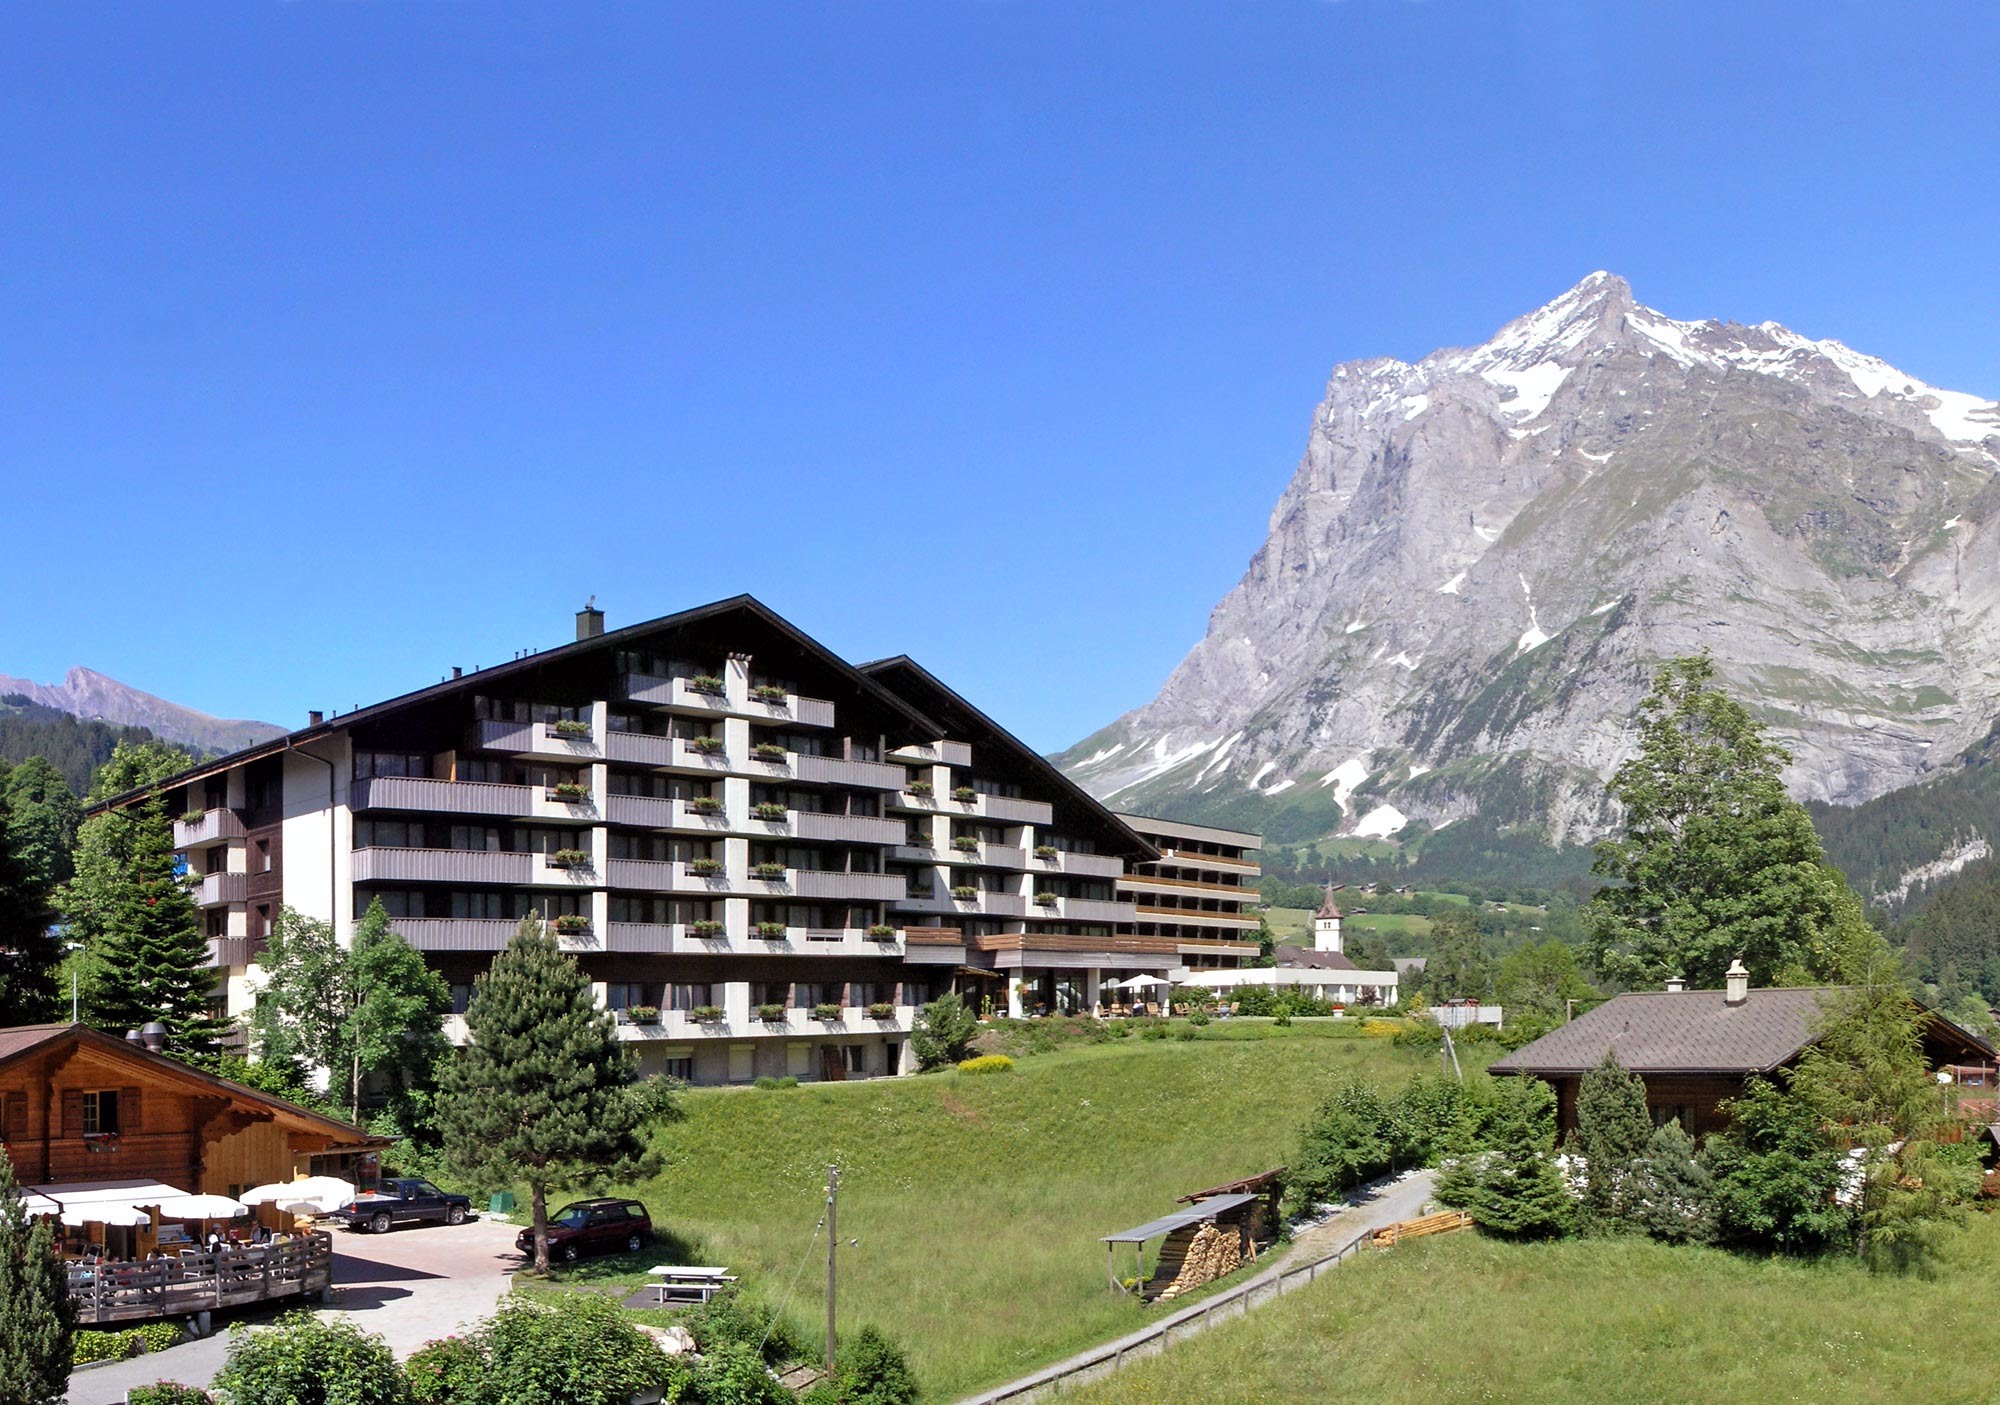 Sunstar Alpine Hotel Grindelwald | Hotelvideo Sommer - YouTube